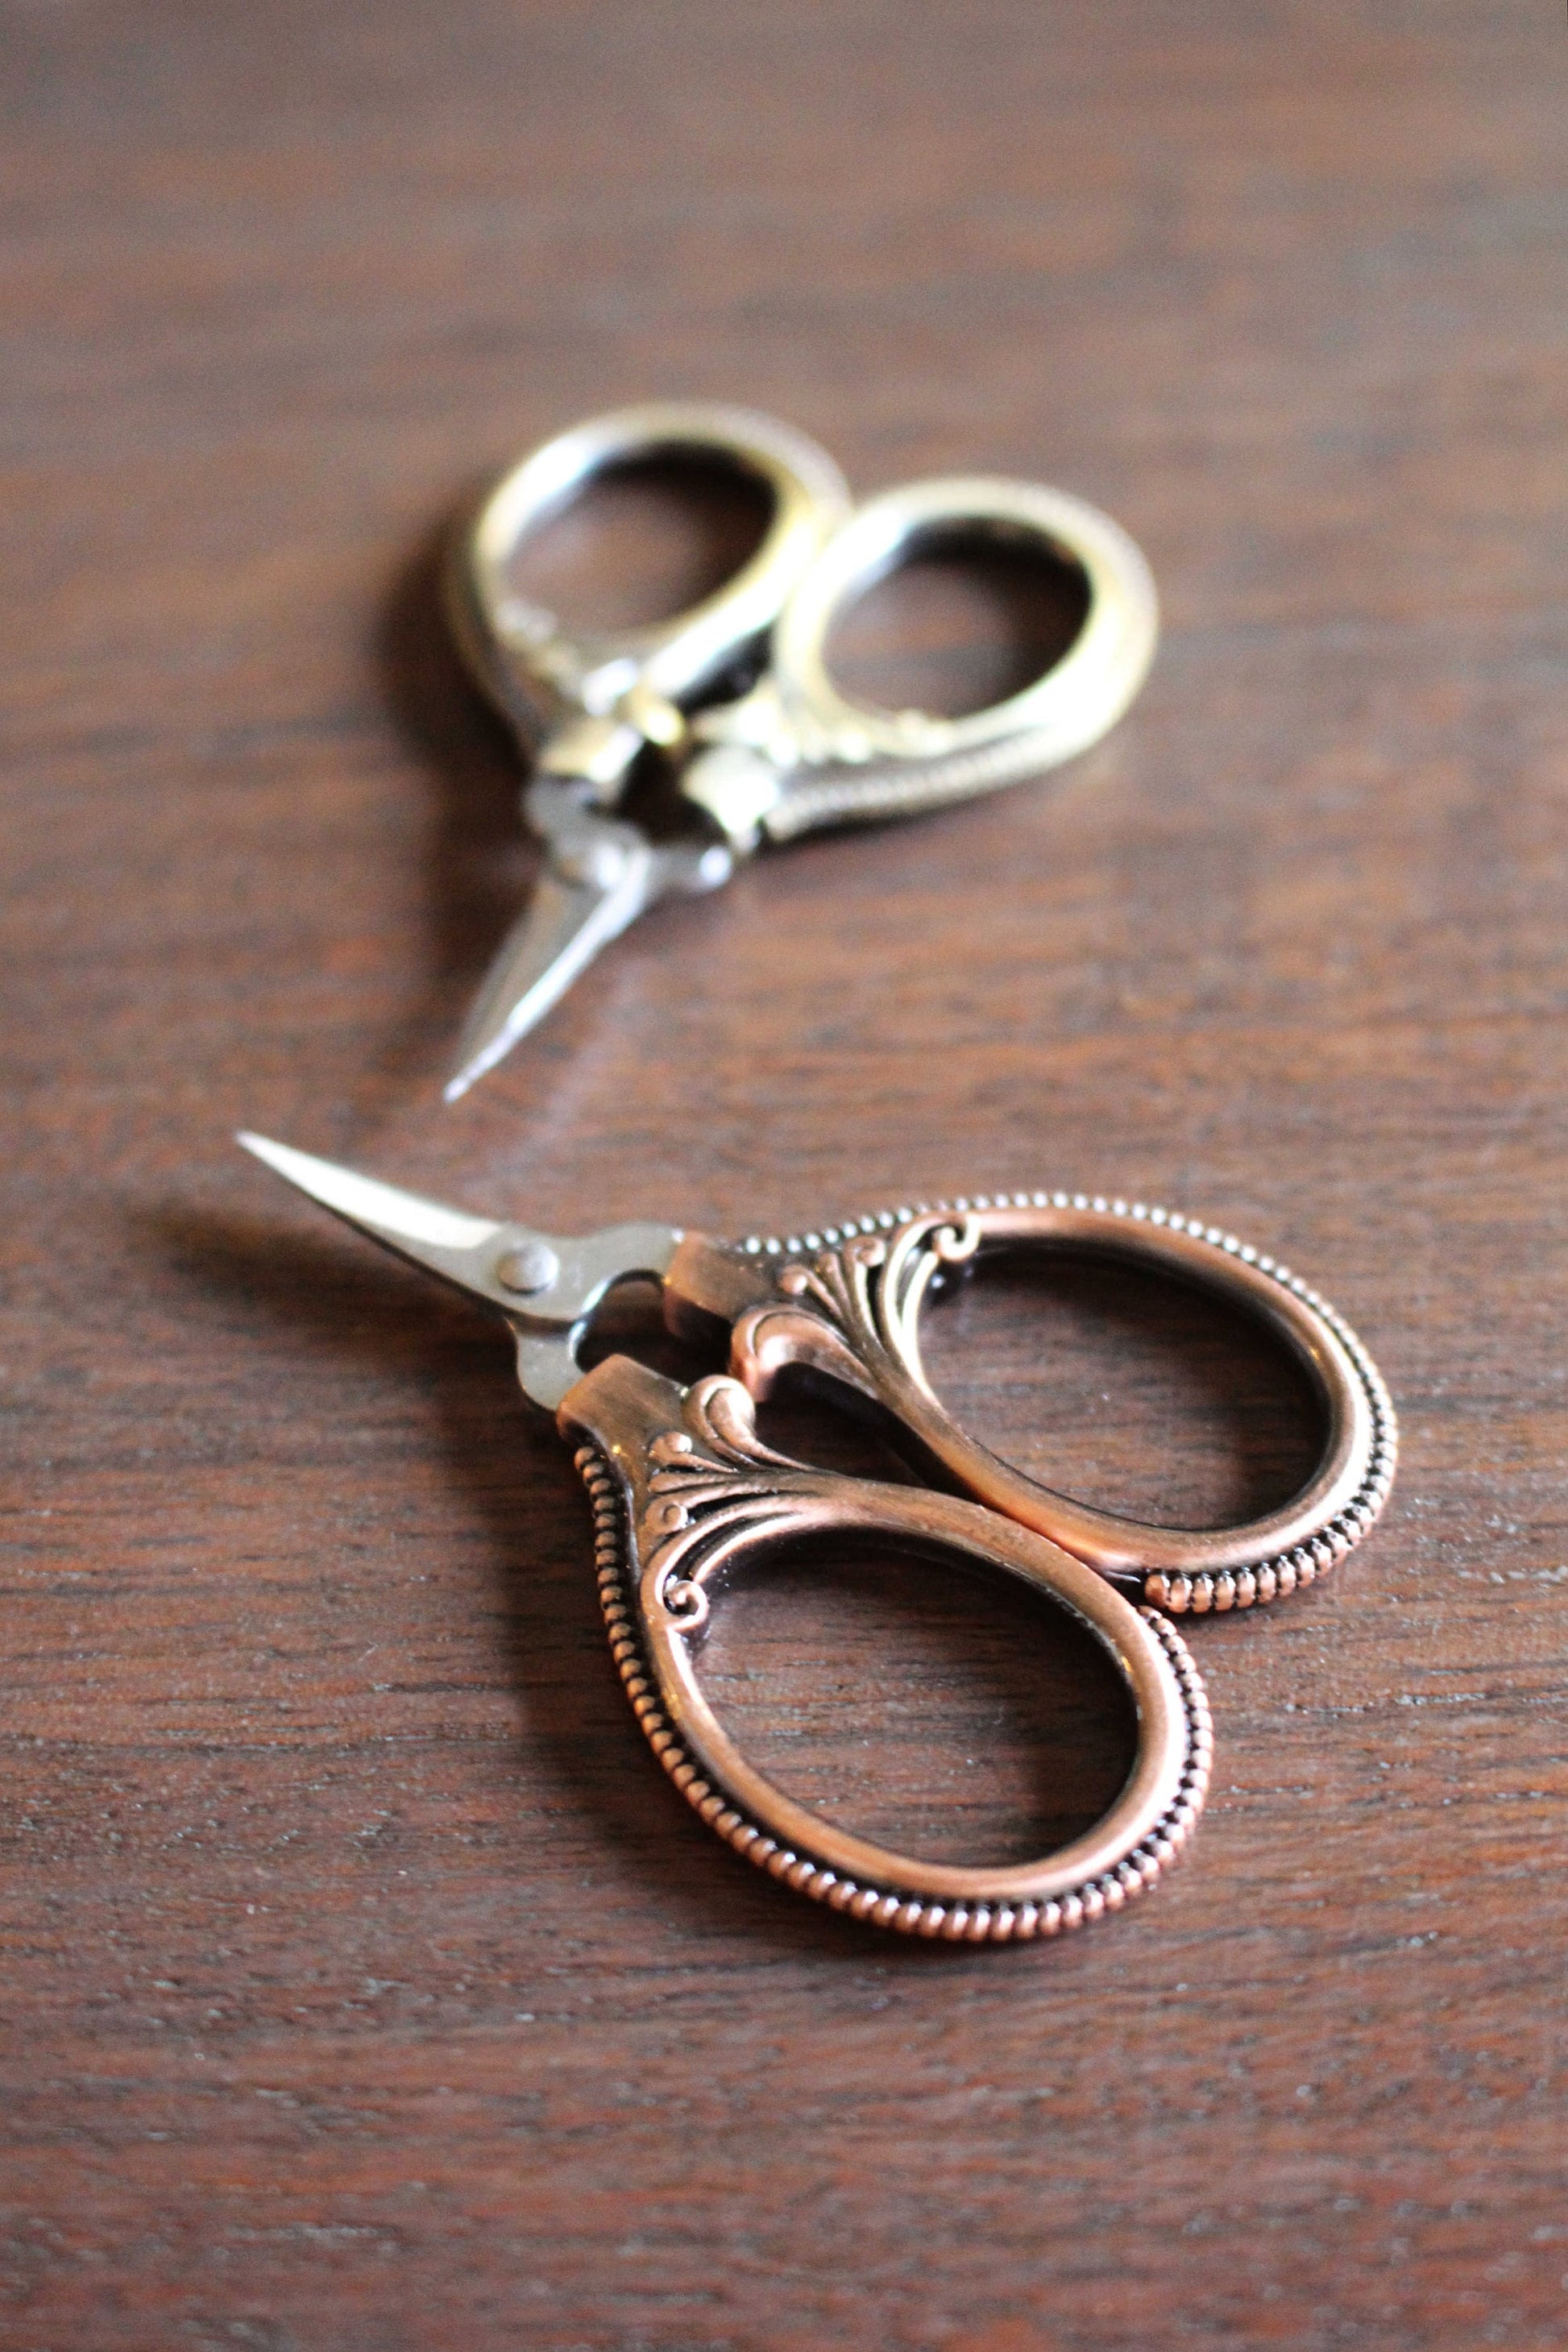 Small Embroidery Scissors –